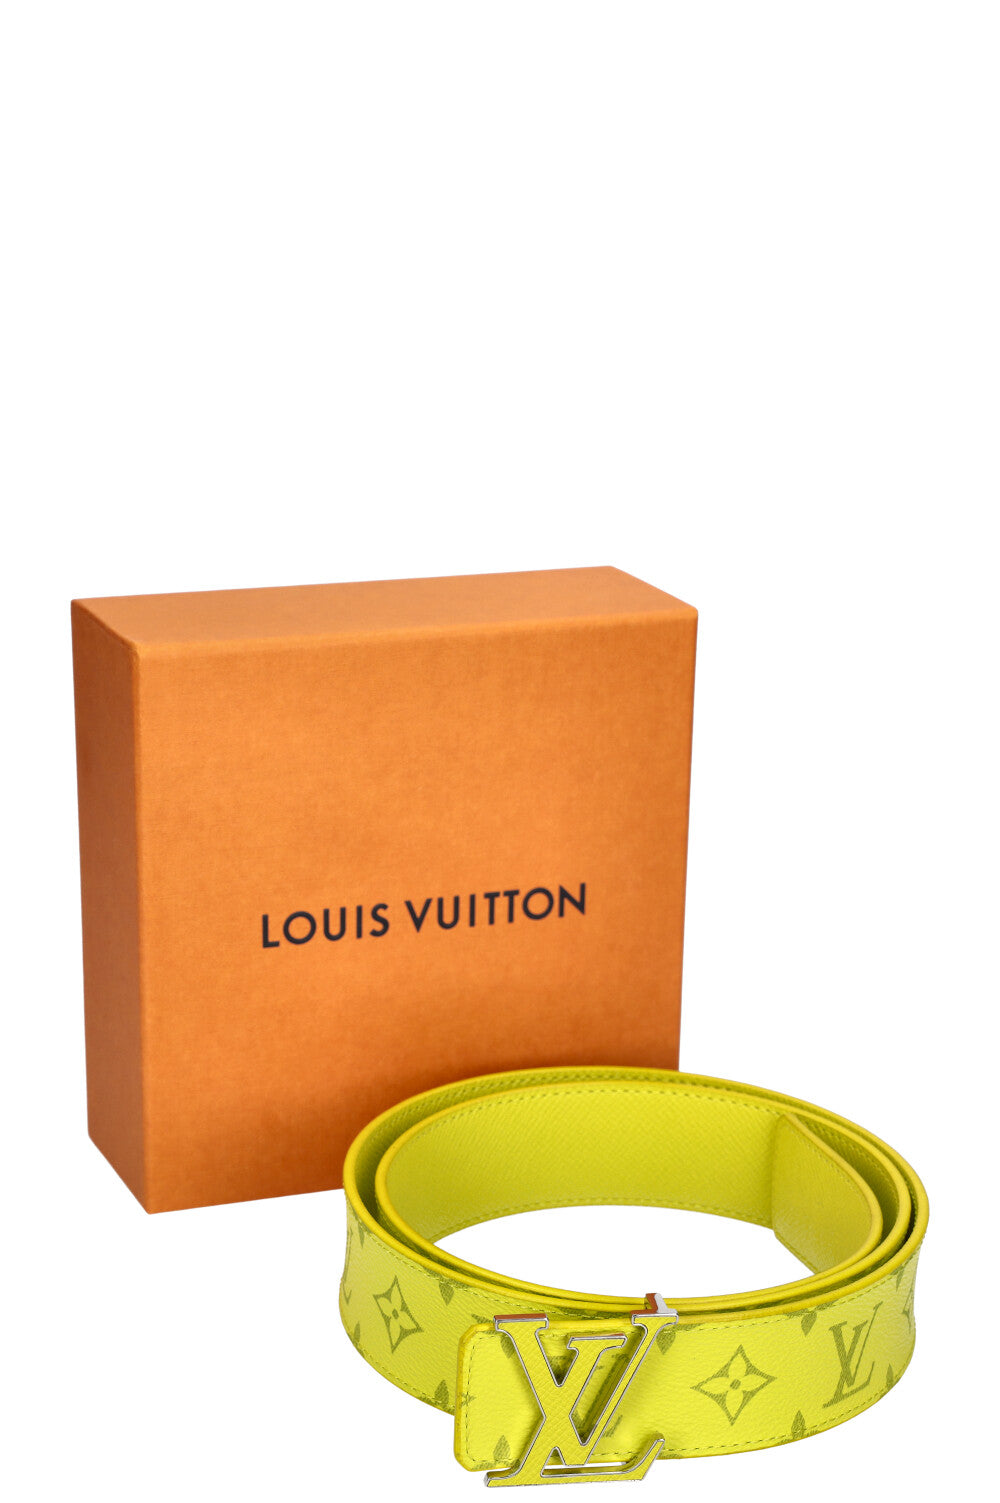 LOUIS VUITTON Initiales Belt MNG Neon Yellow